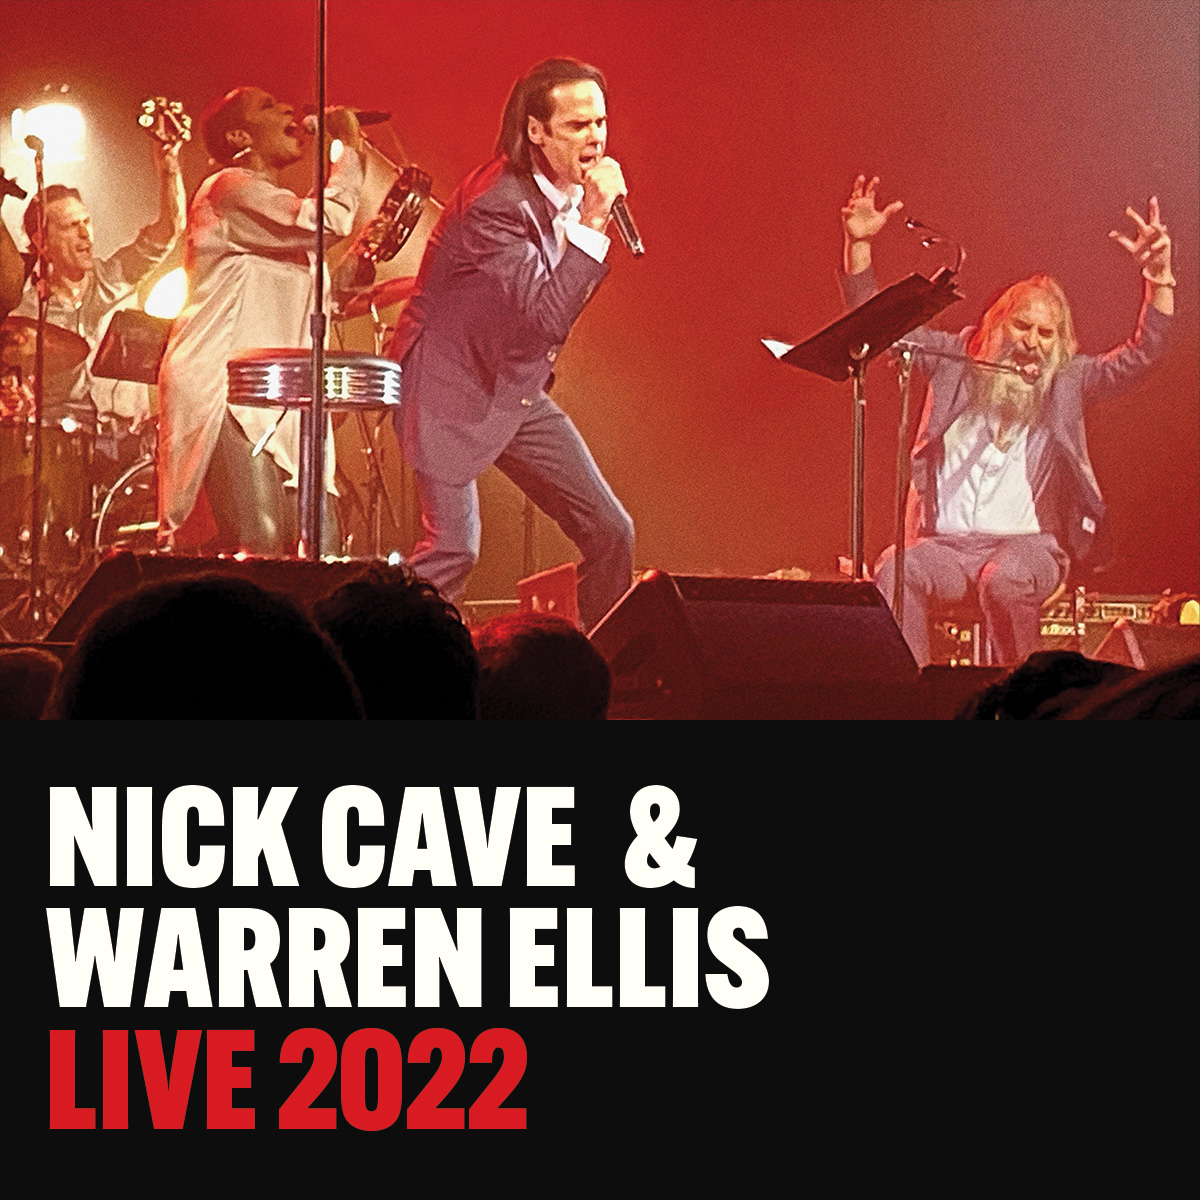 NickCave-WarrenEllis-2022-1200x1200.jpg